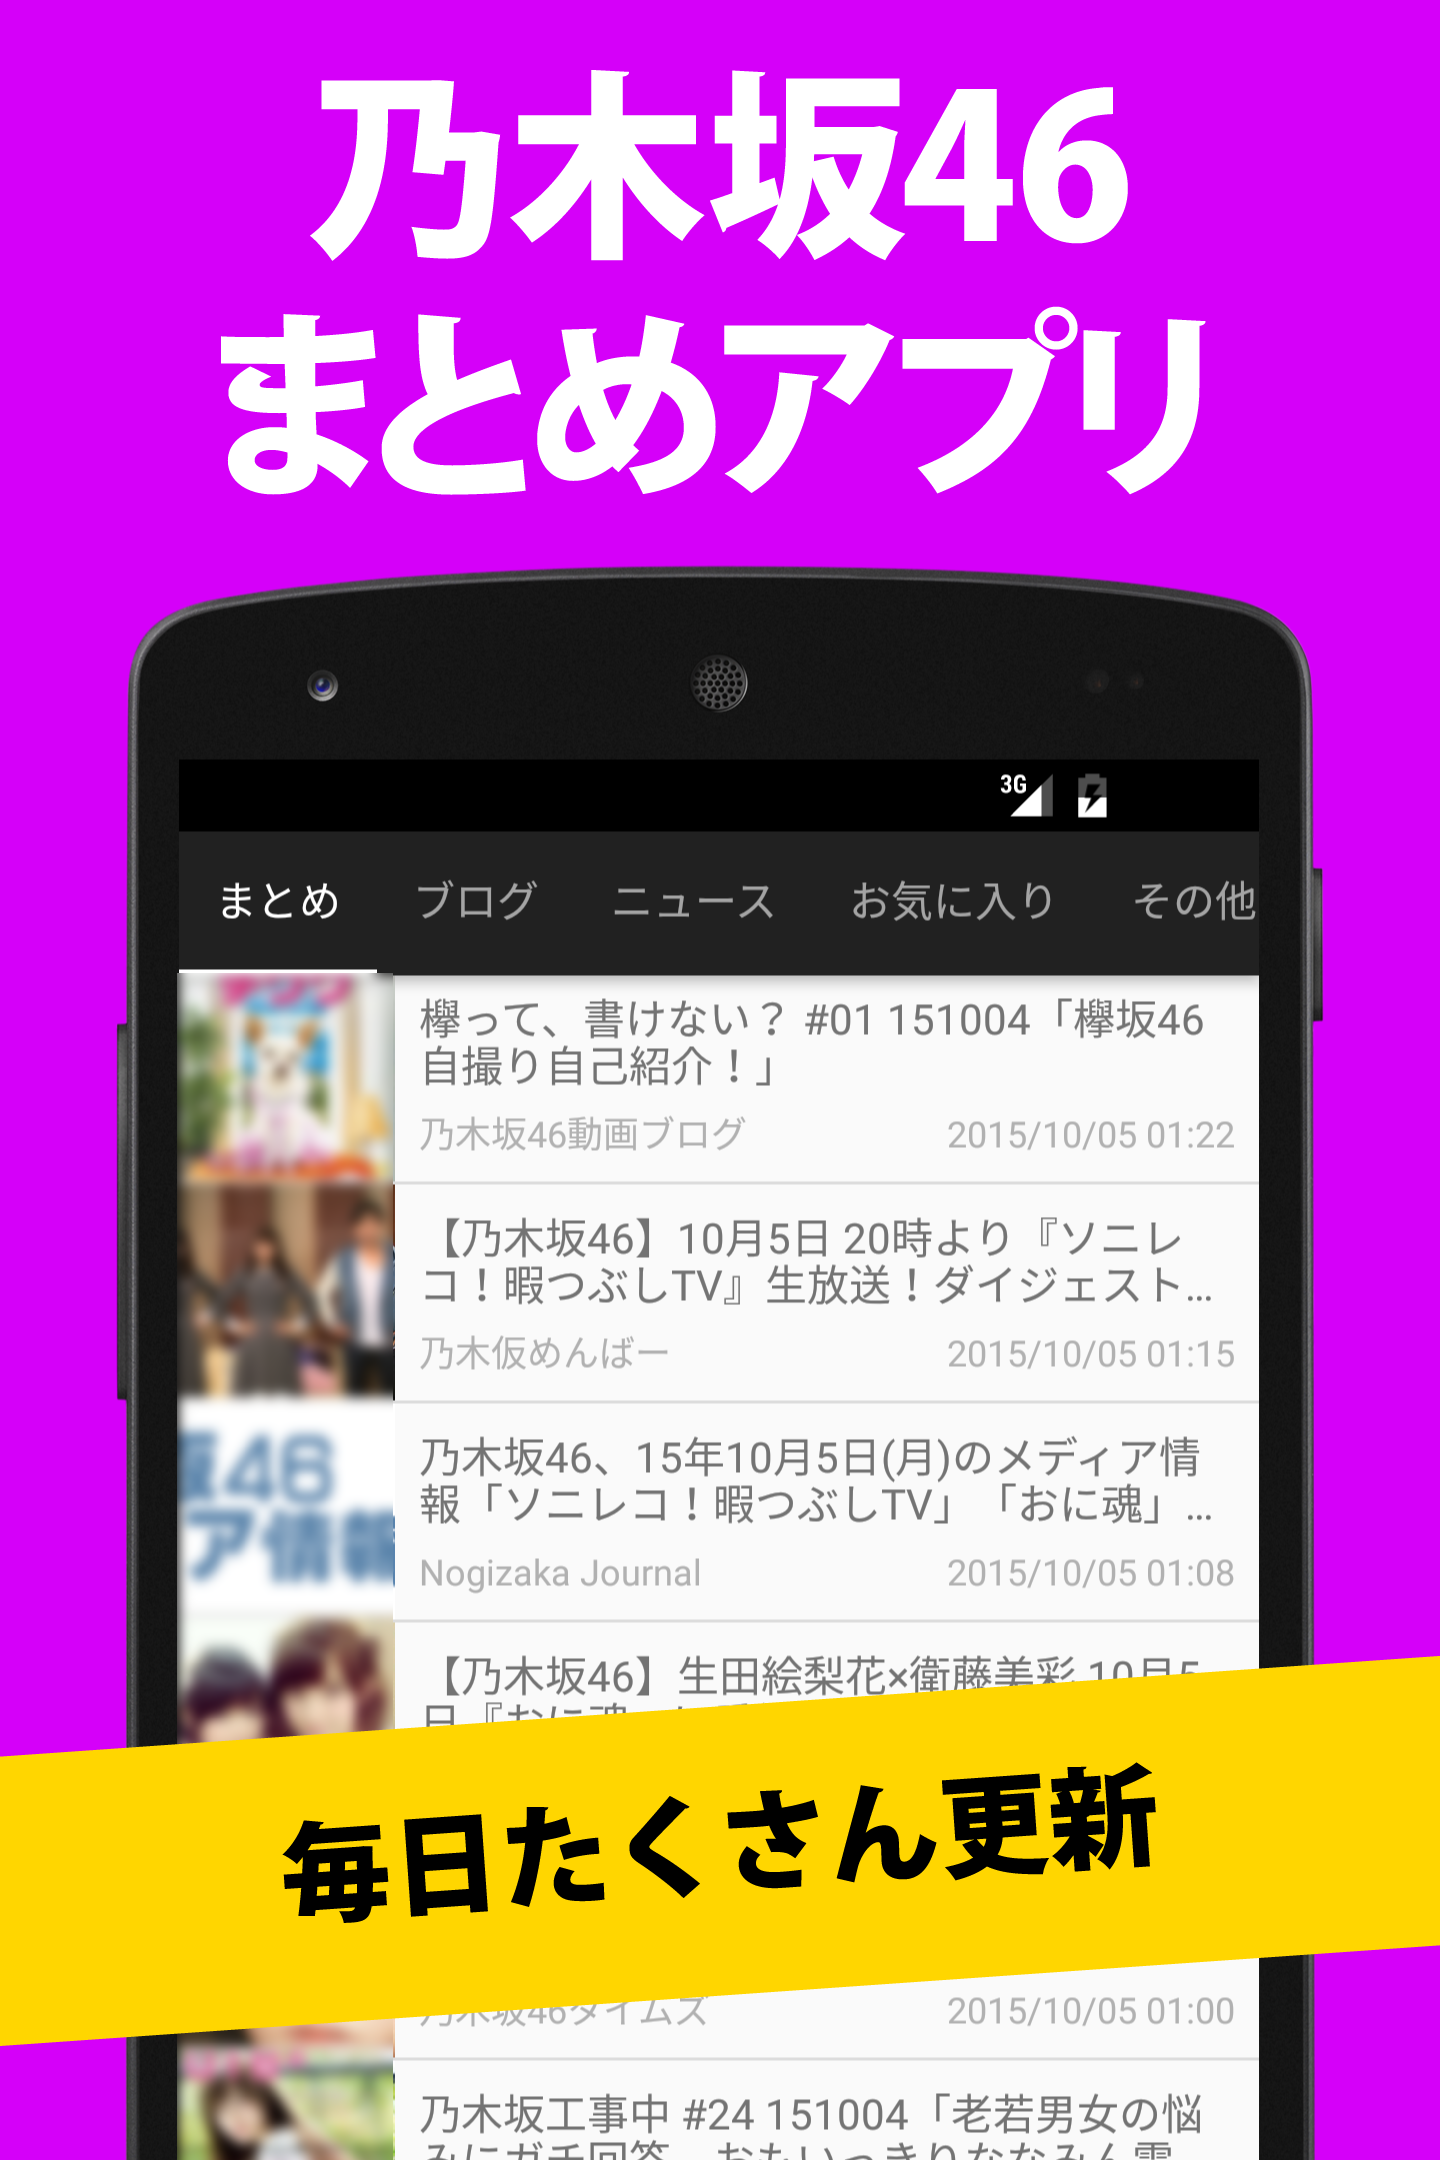 Android application 乃木坂まとめ for 乃木坂46 screenshort